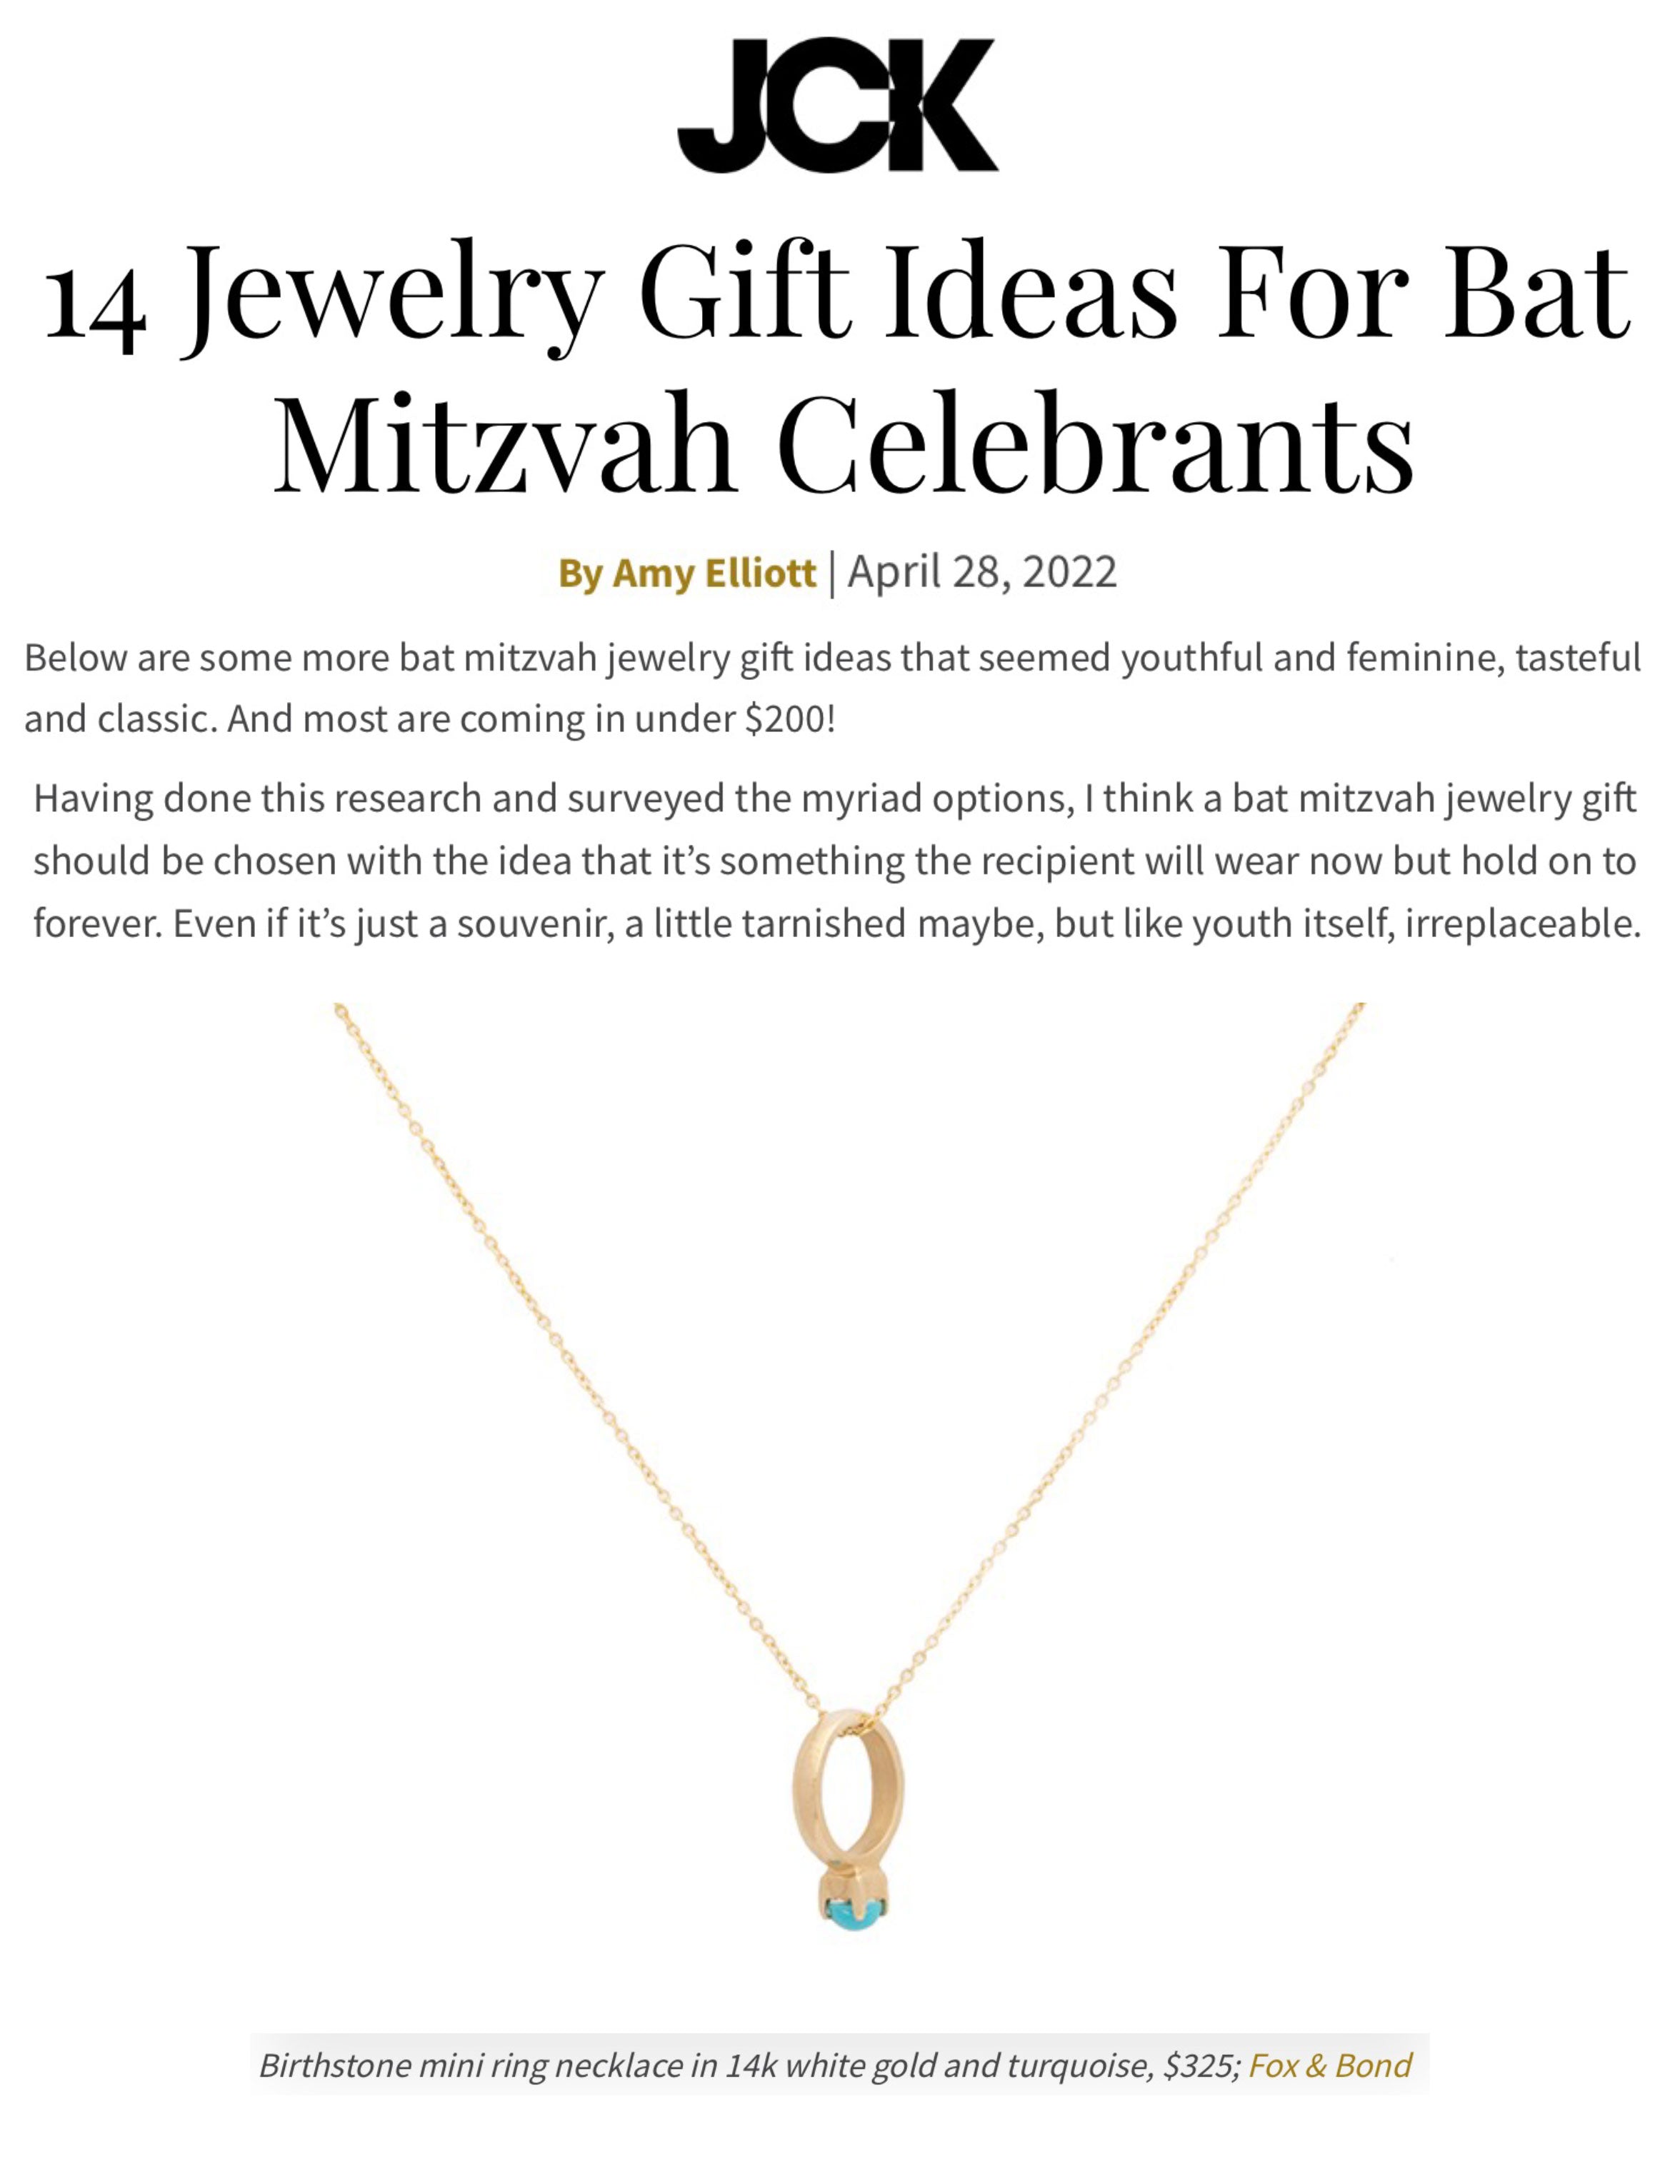 JCK: 14 Jewelry Gift Ideas For Bat Mitzvah Celebrants